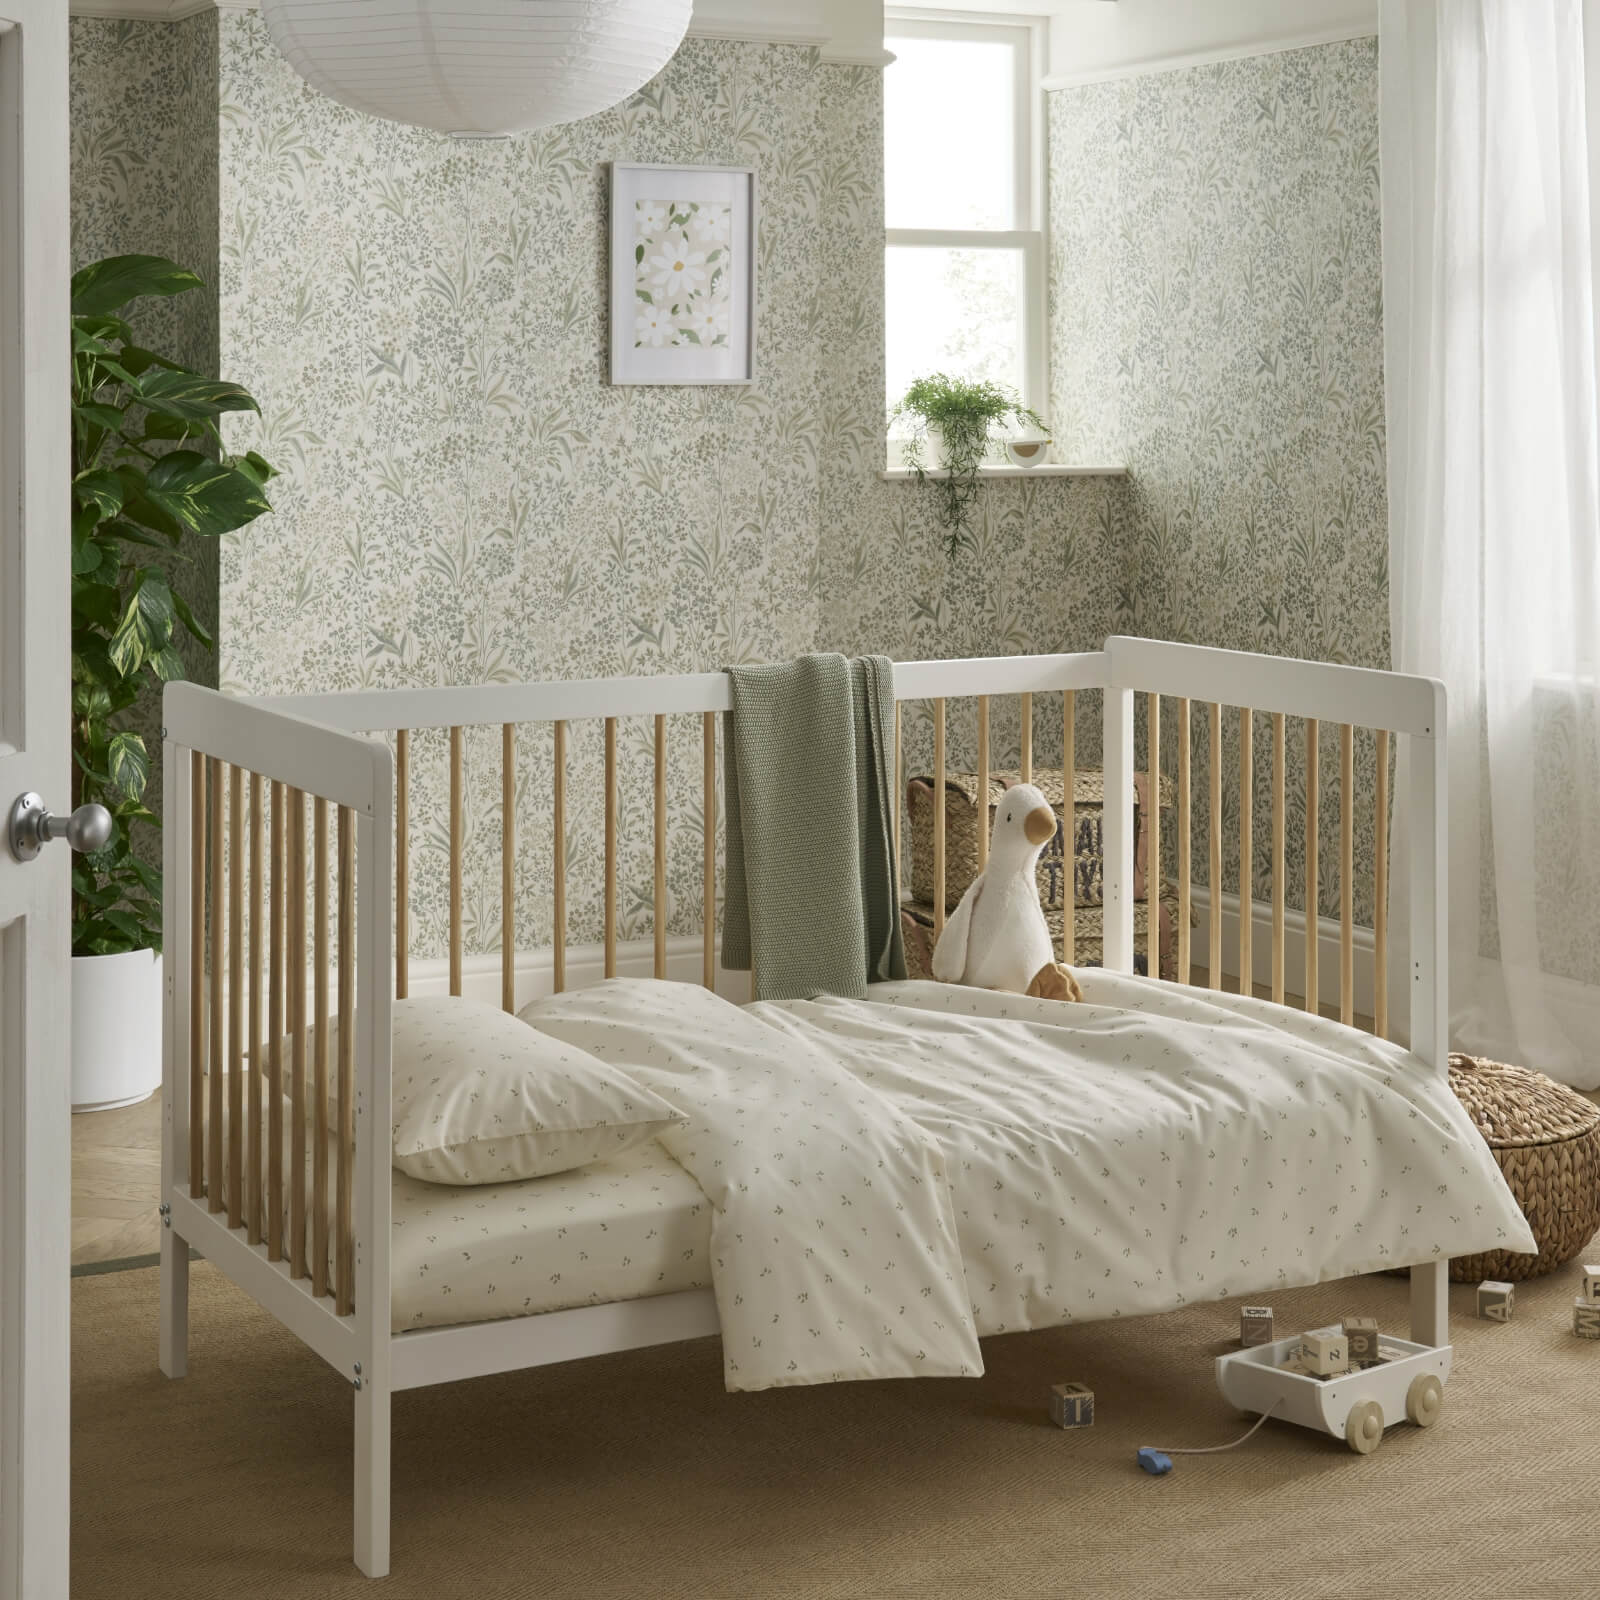 CuddleCo Nursery Room Sets CuddleCo Nola 3 Piece Room Set - White & Natural